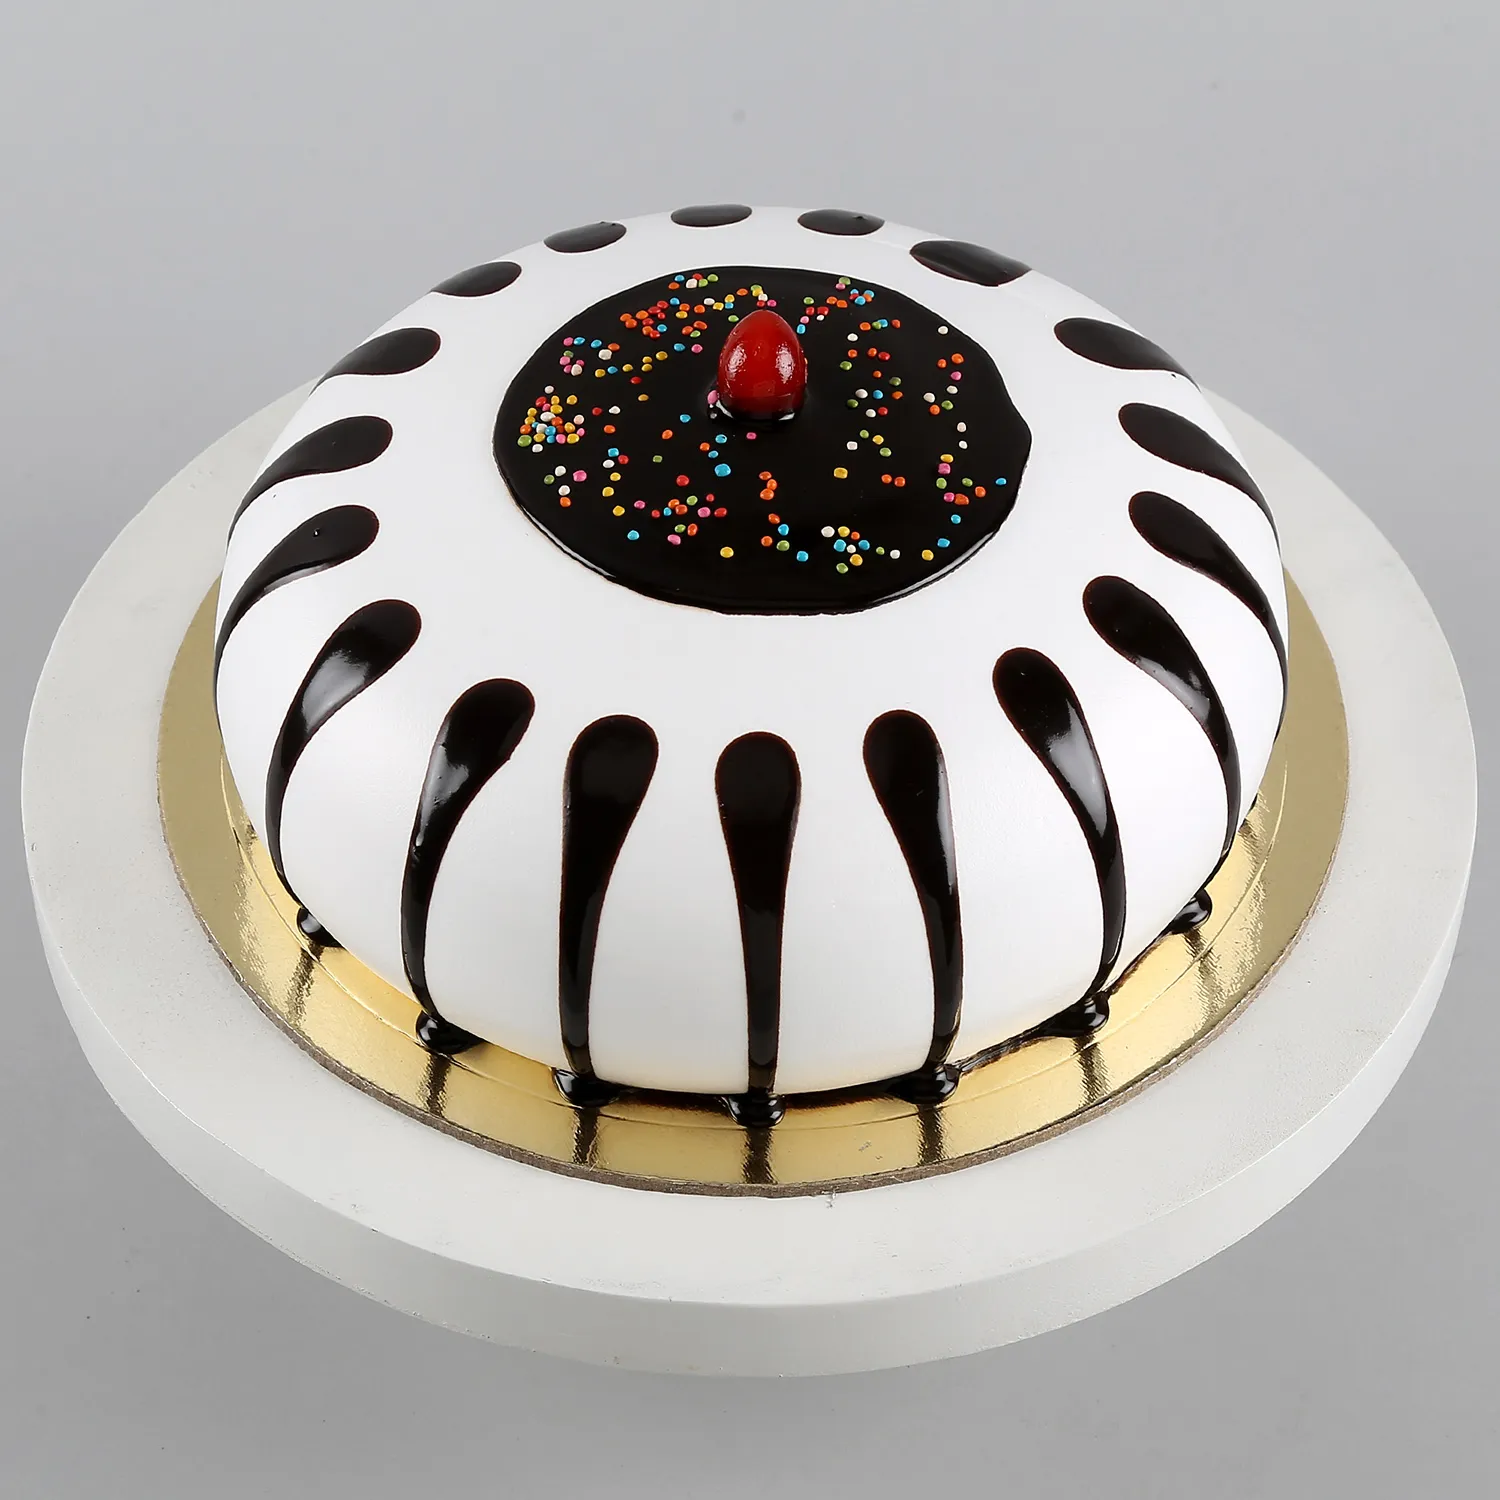 BIRTHDAY Animlas cake pineapple flower fancy cake making by New Cake Wala -  YouTube | Jungle theme cakes, Cake, Themed cakes